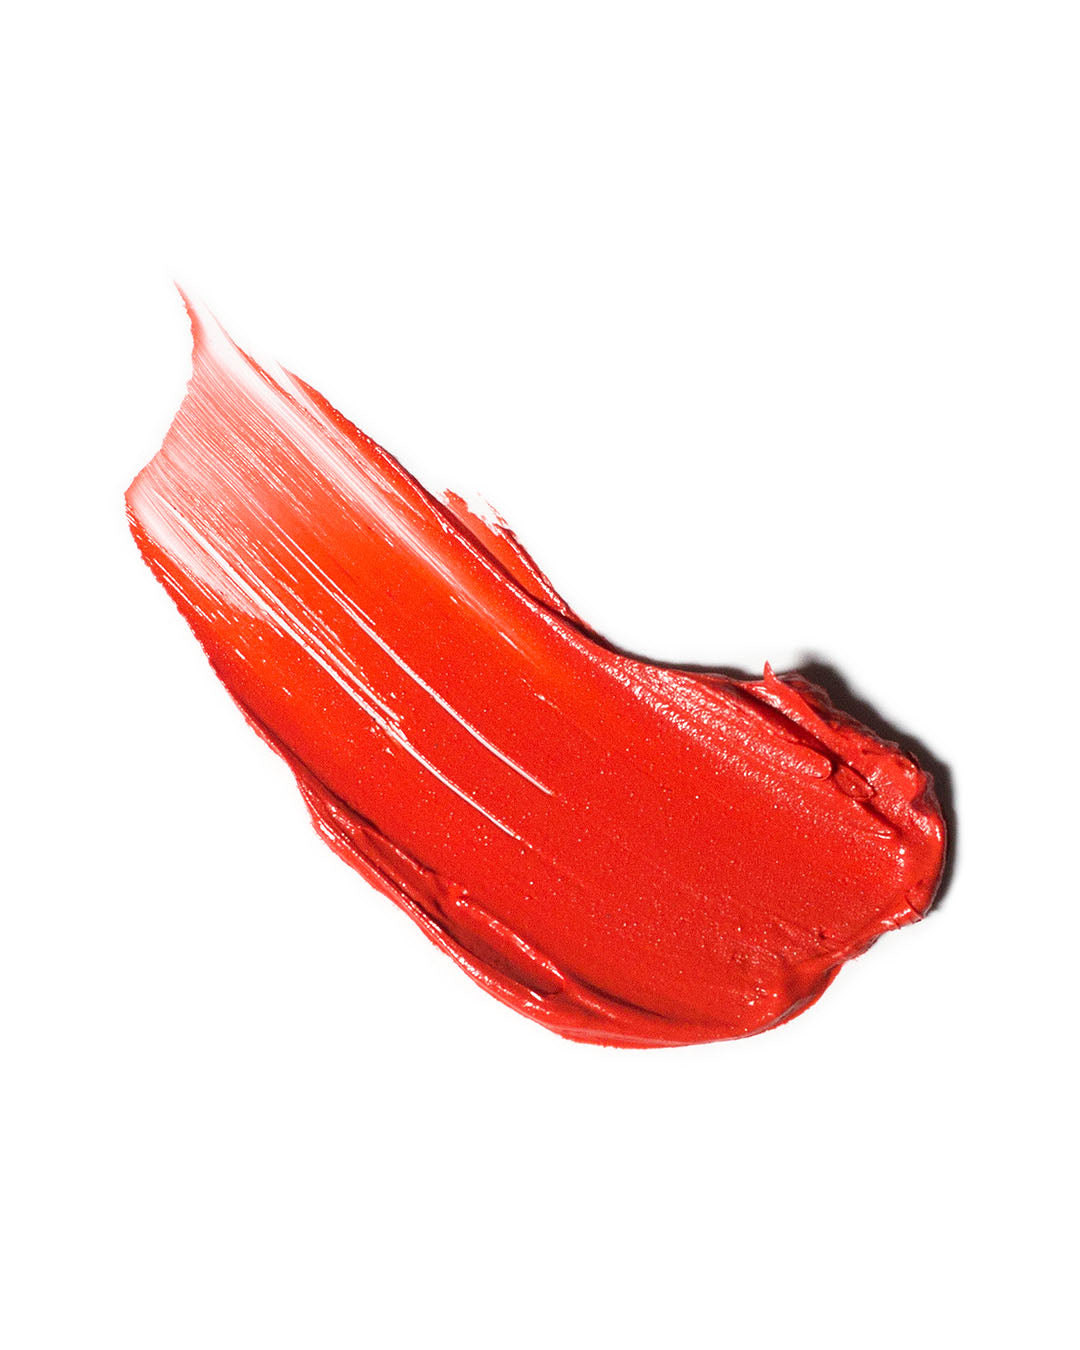 Carrot Colour Pot - Hello Makeup by Ere Perez - Prae Store